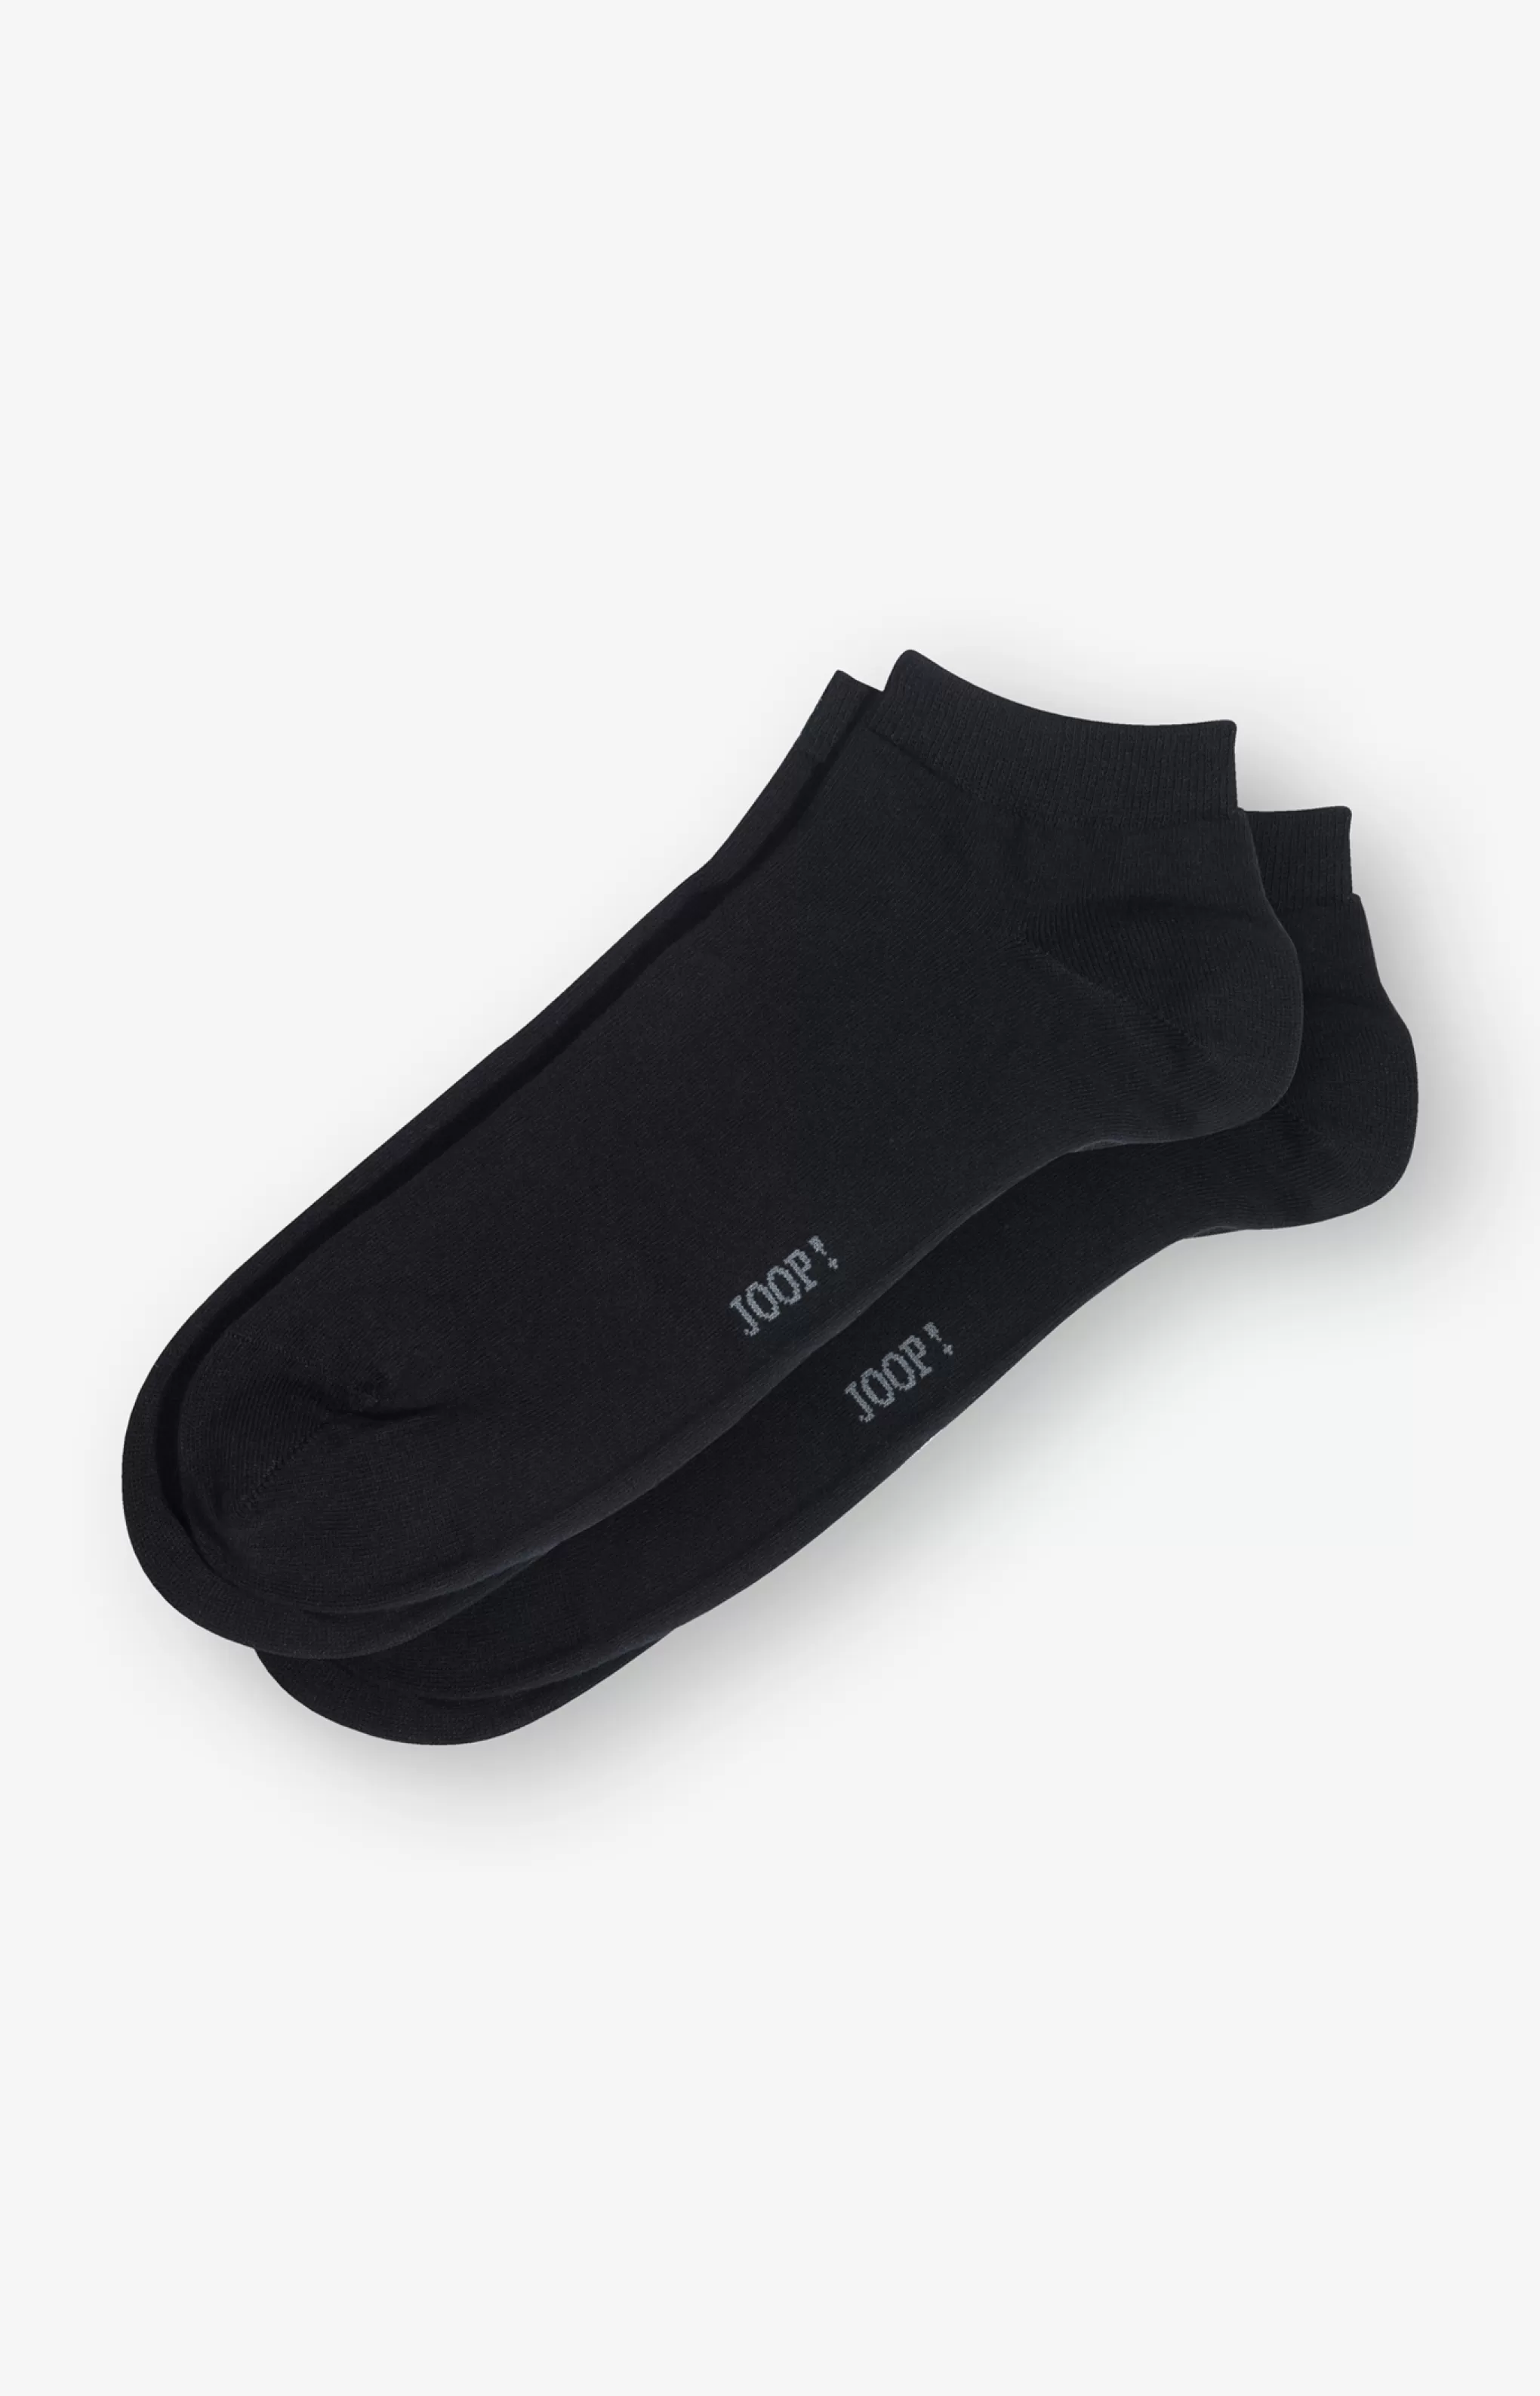 Socks*JOOP Socks 3-pack of trainer socks in black